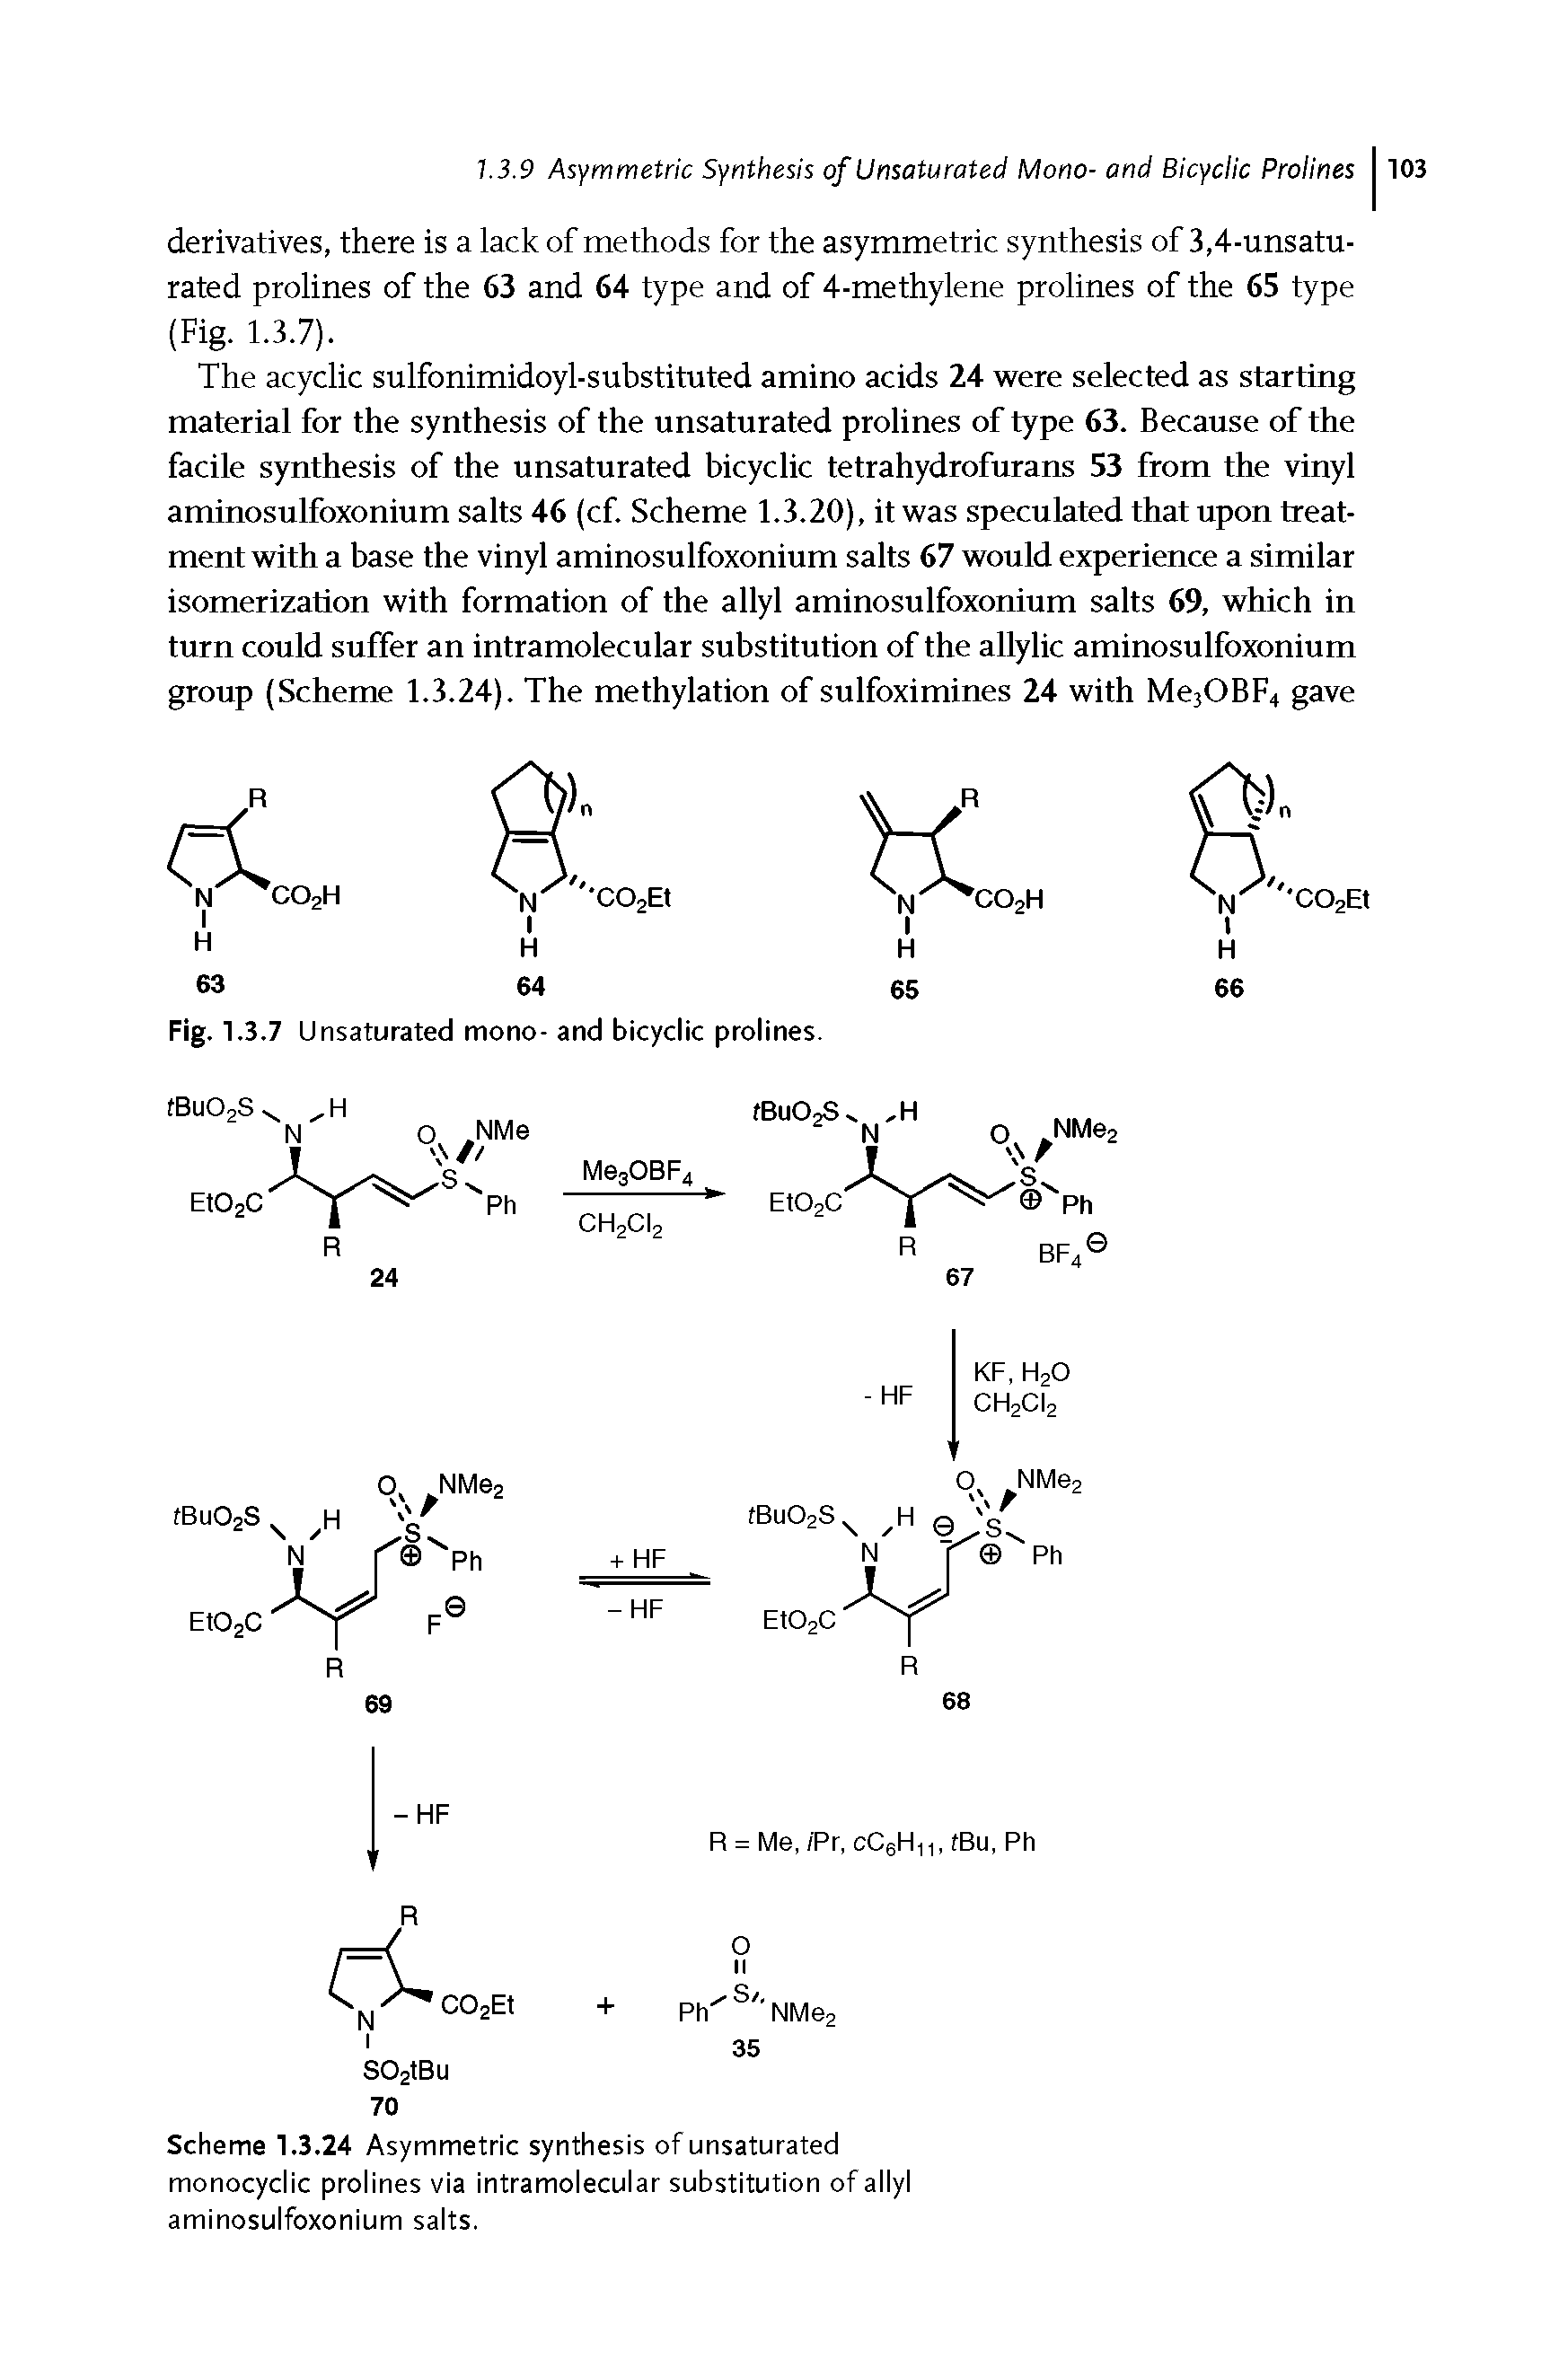 Scheme 1.3.24 Asymmetric synthesis of unsaturated monocyclic prolines via intramolecular substitution of allyl aminosulfoxonium salts.